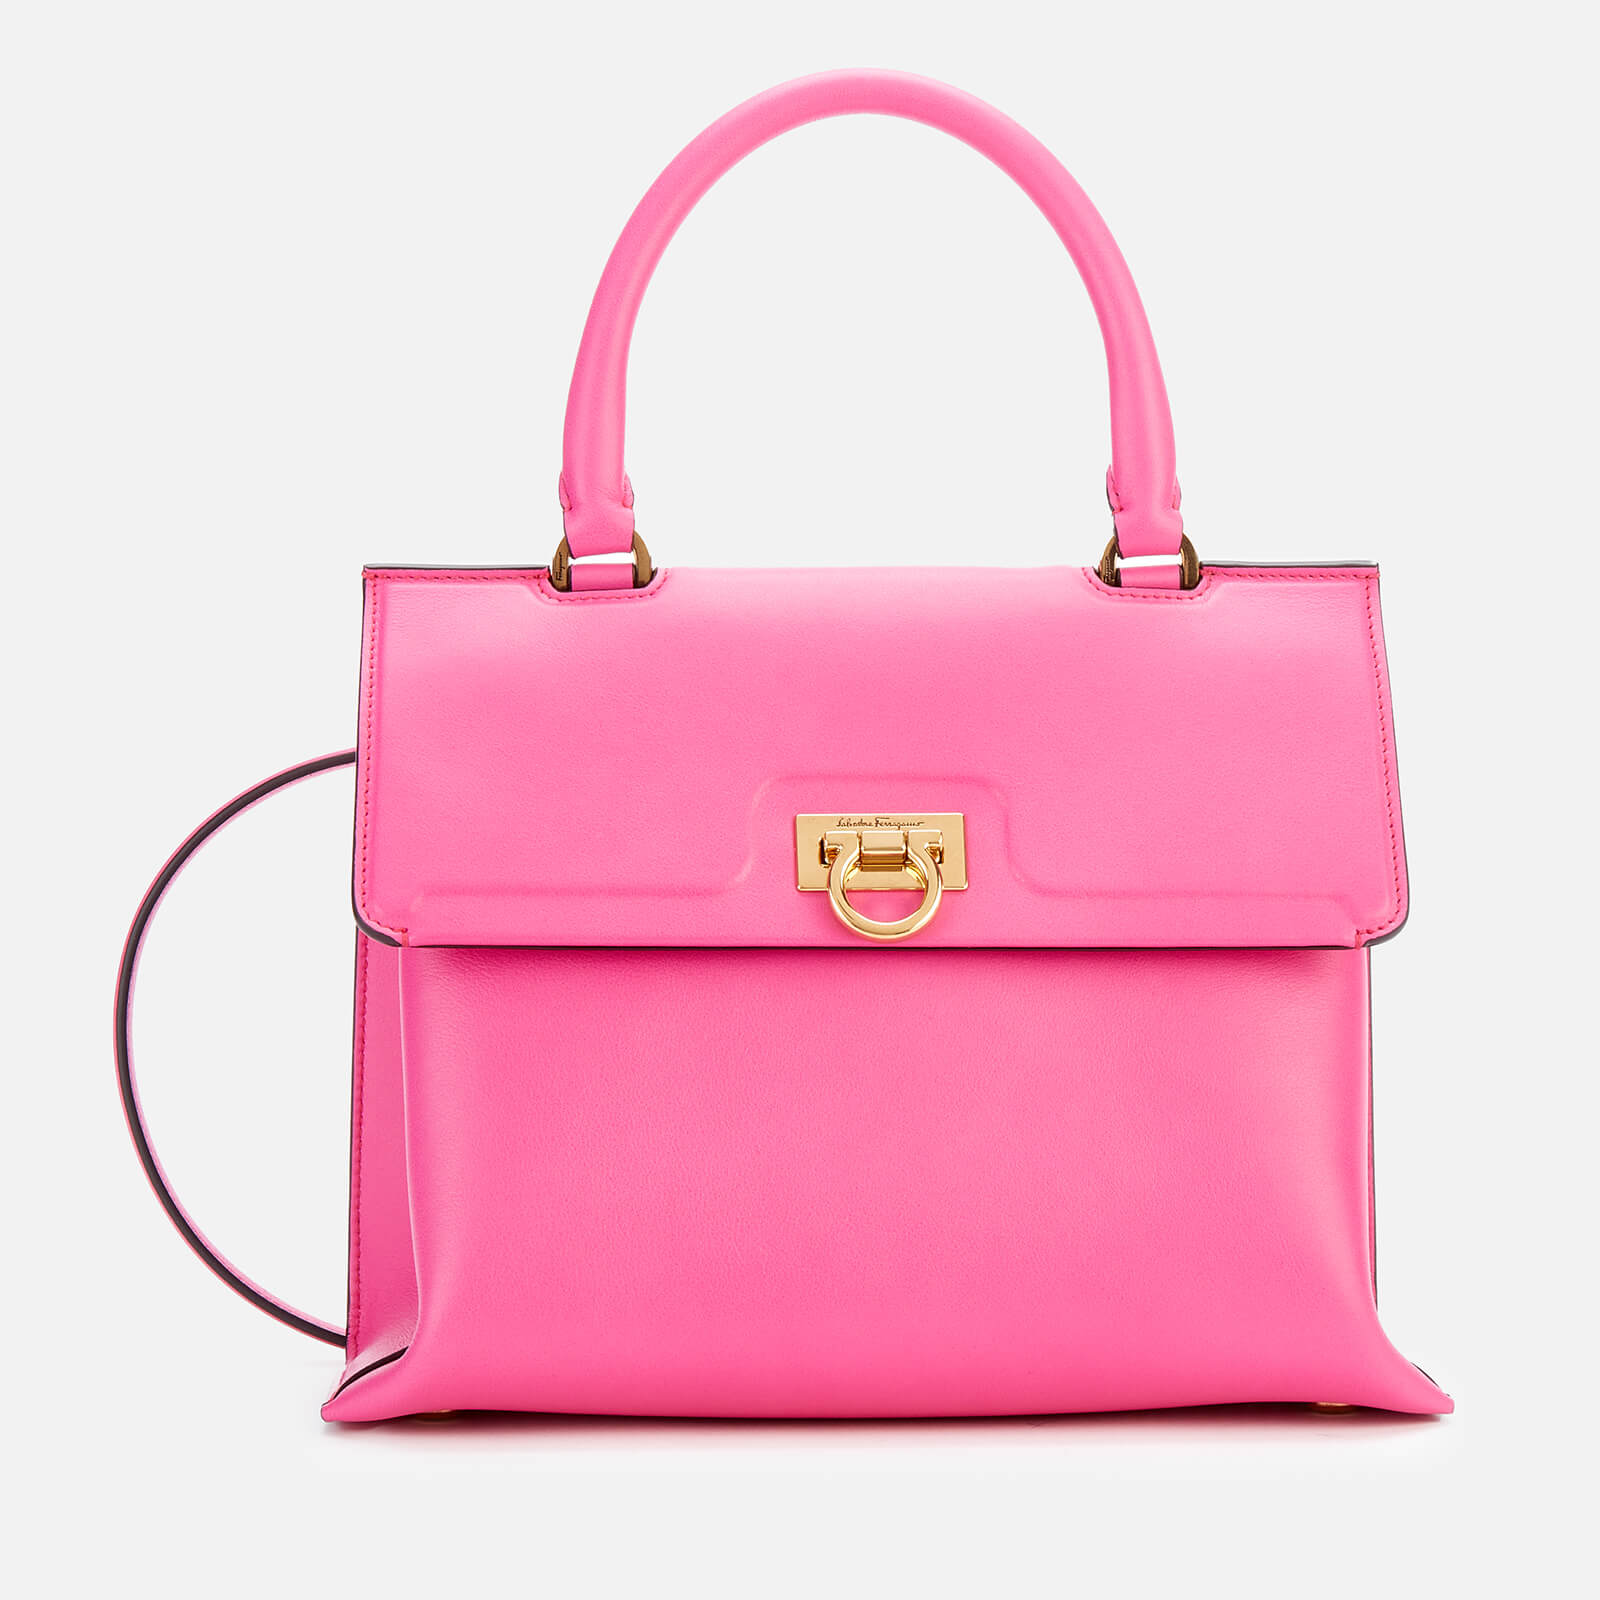 Salvatore Ferragamo Women's Trifolio Top Handle Bag - Hot Pink